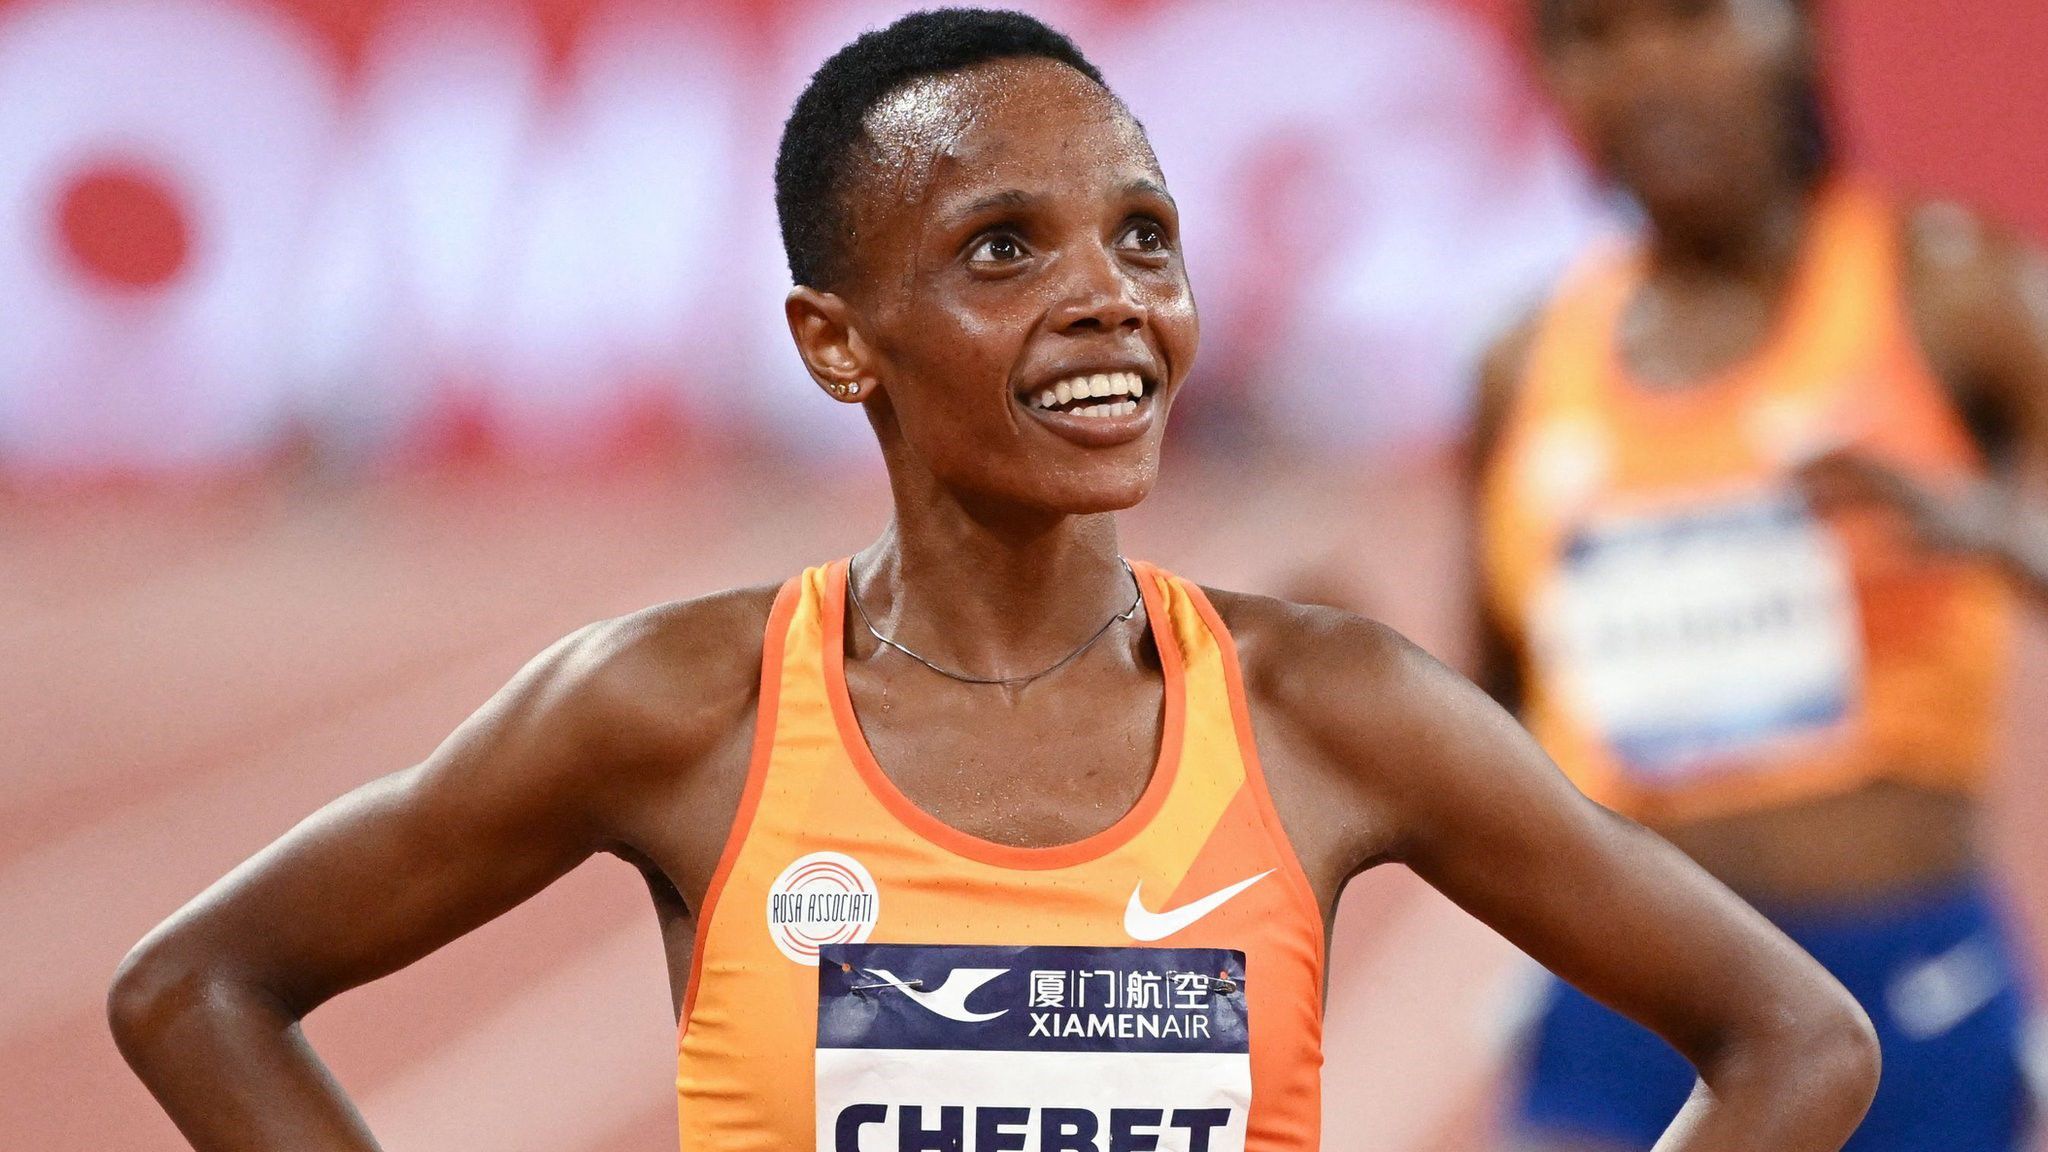 Beatrice Chebet rekordot döntött